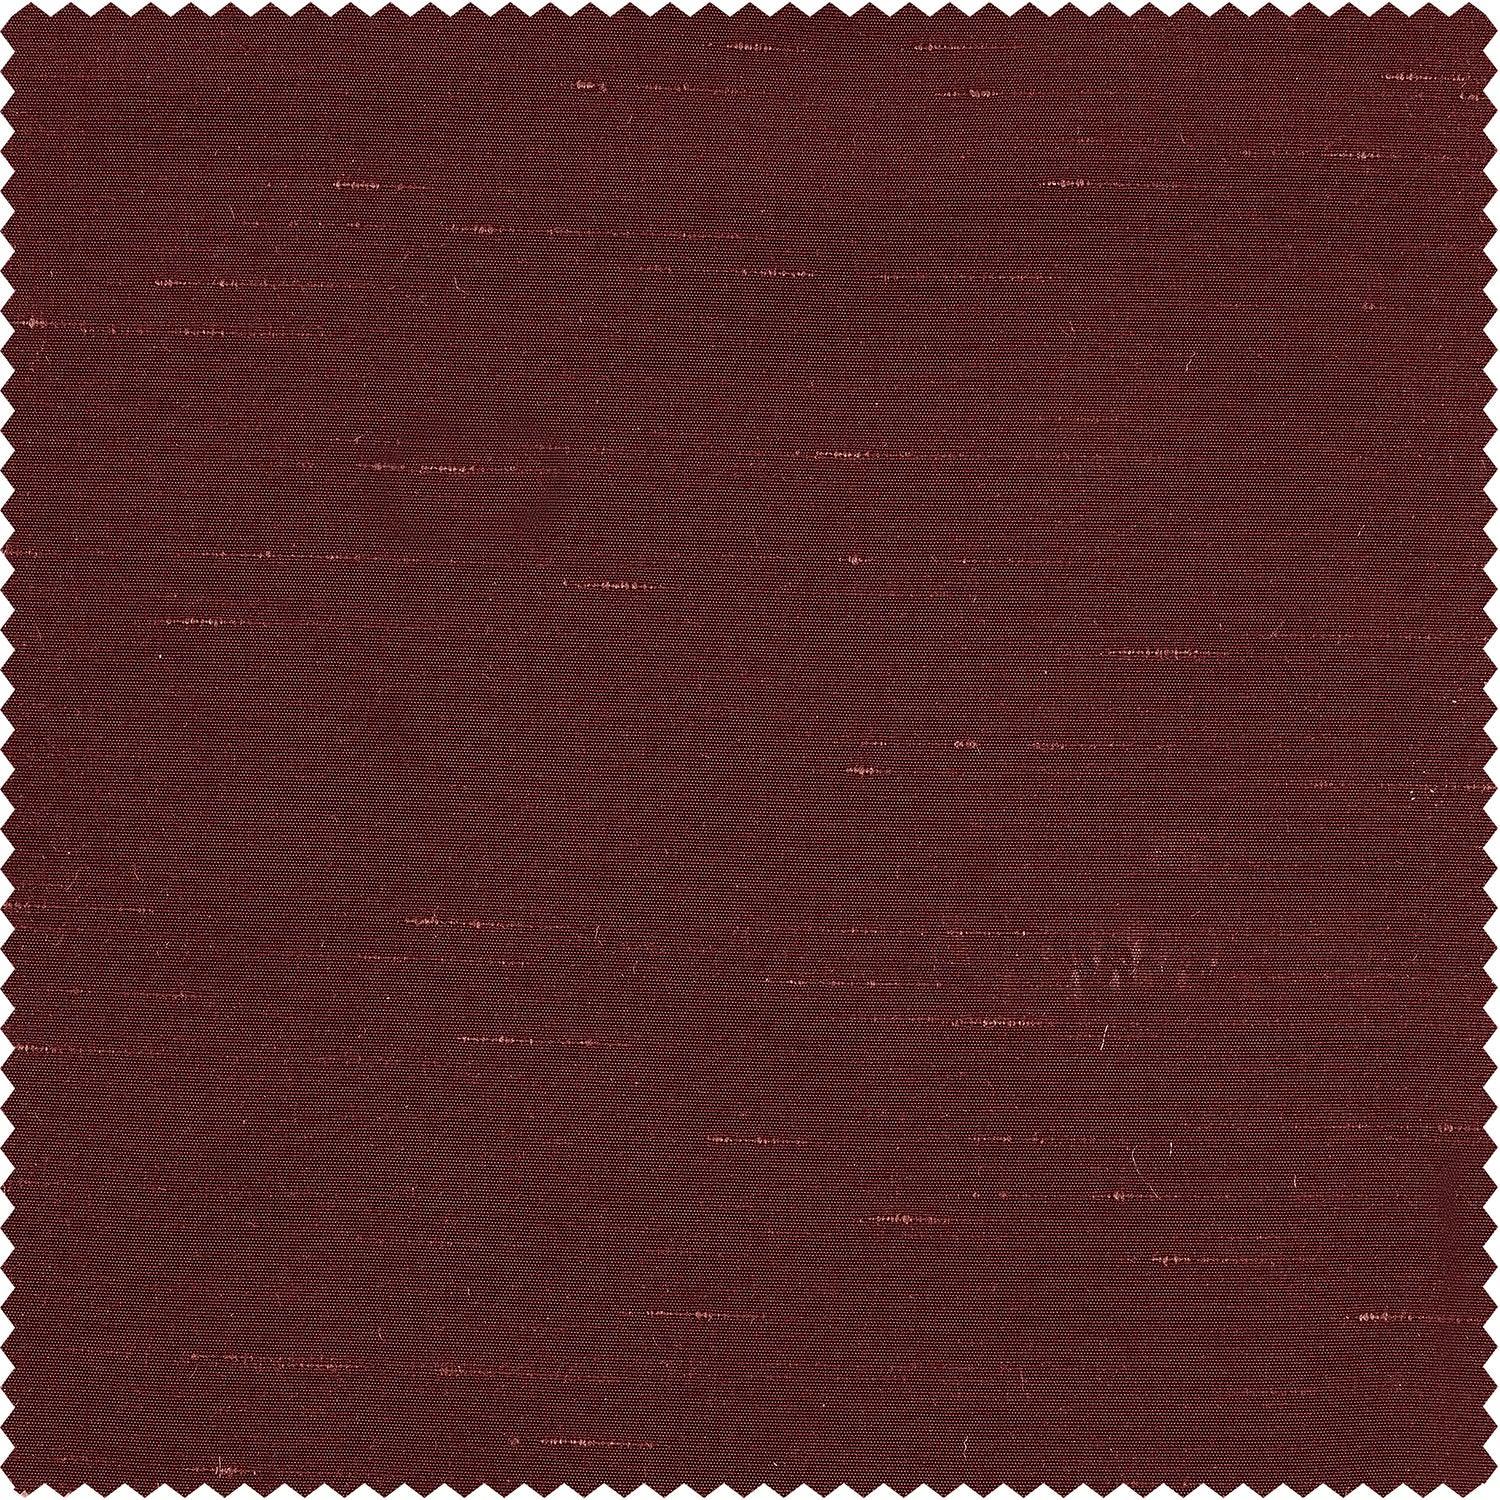 Ruby Vintage Textured Faux Dupioni Silk Tie-Up Window Shade